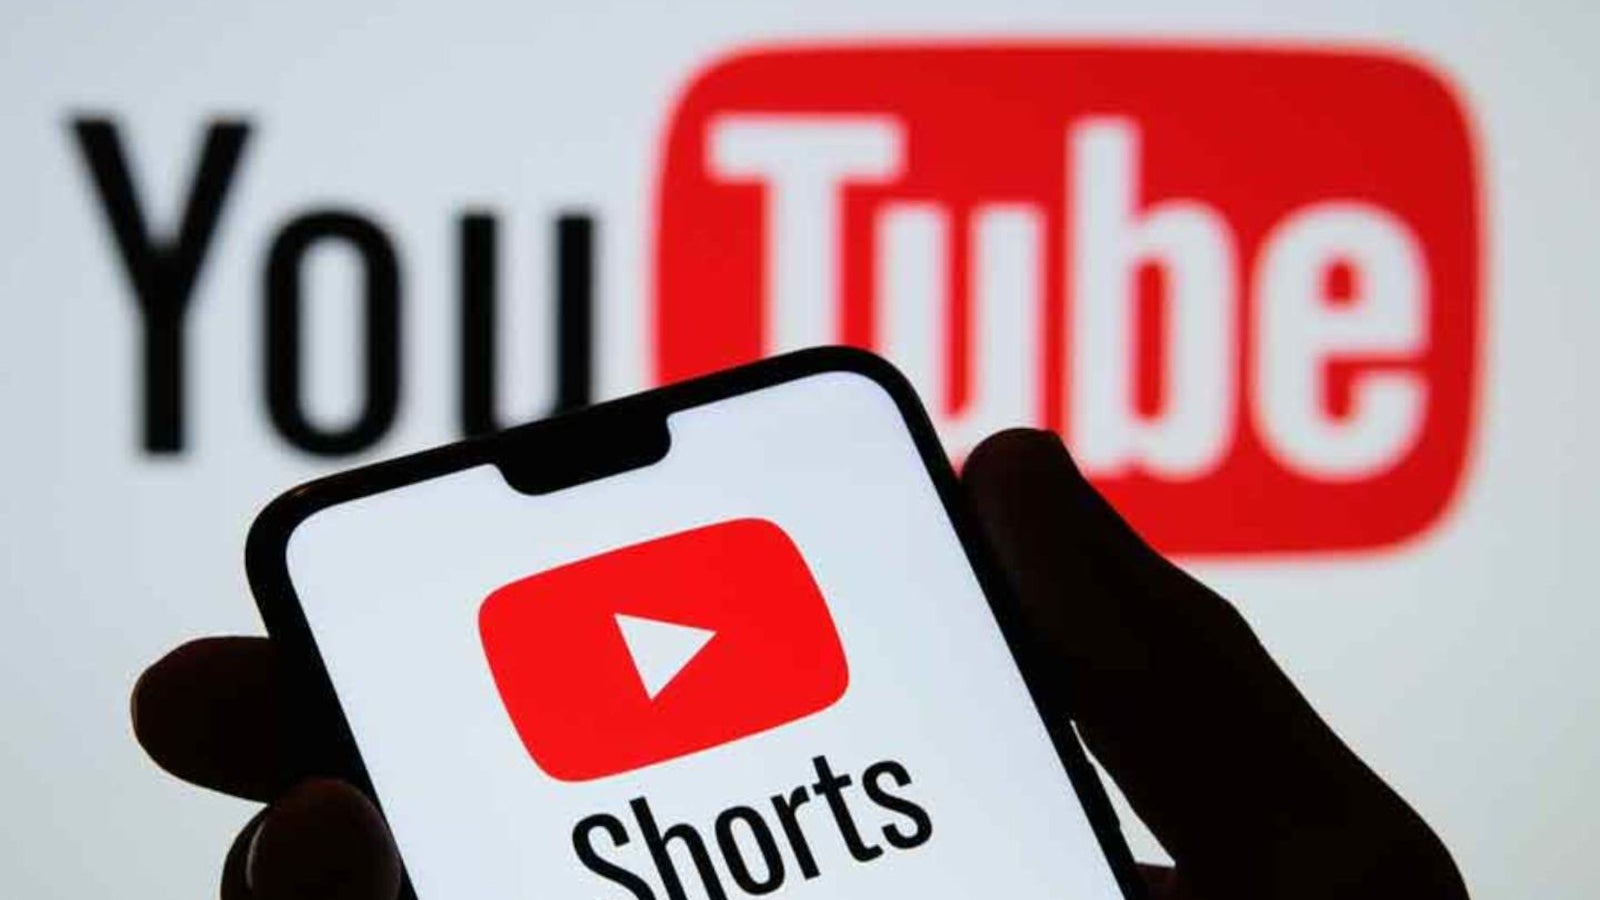 shorts feed youtube